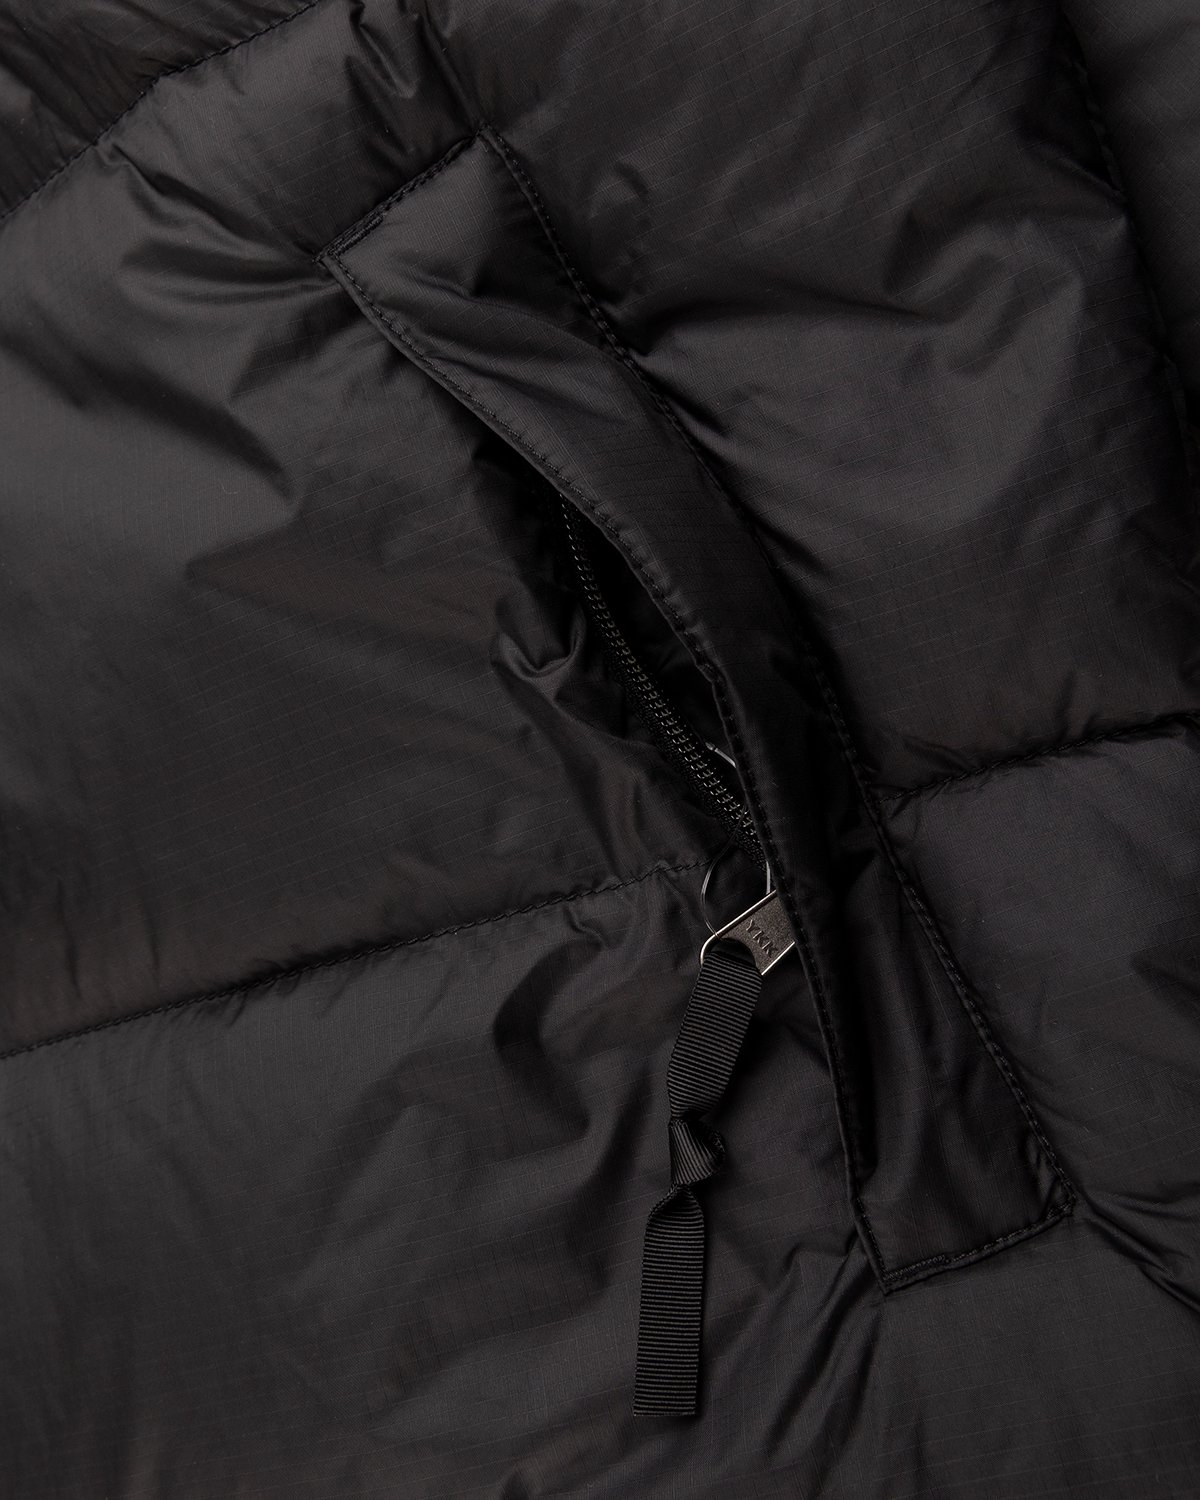 The North Face – 1996 Retro Nuptse Jacket Black | Highsnobiety Shop